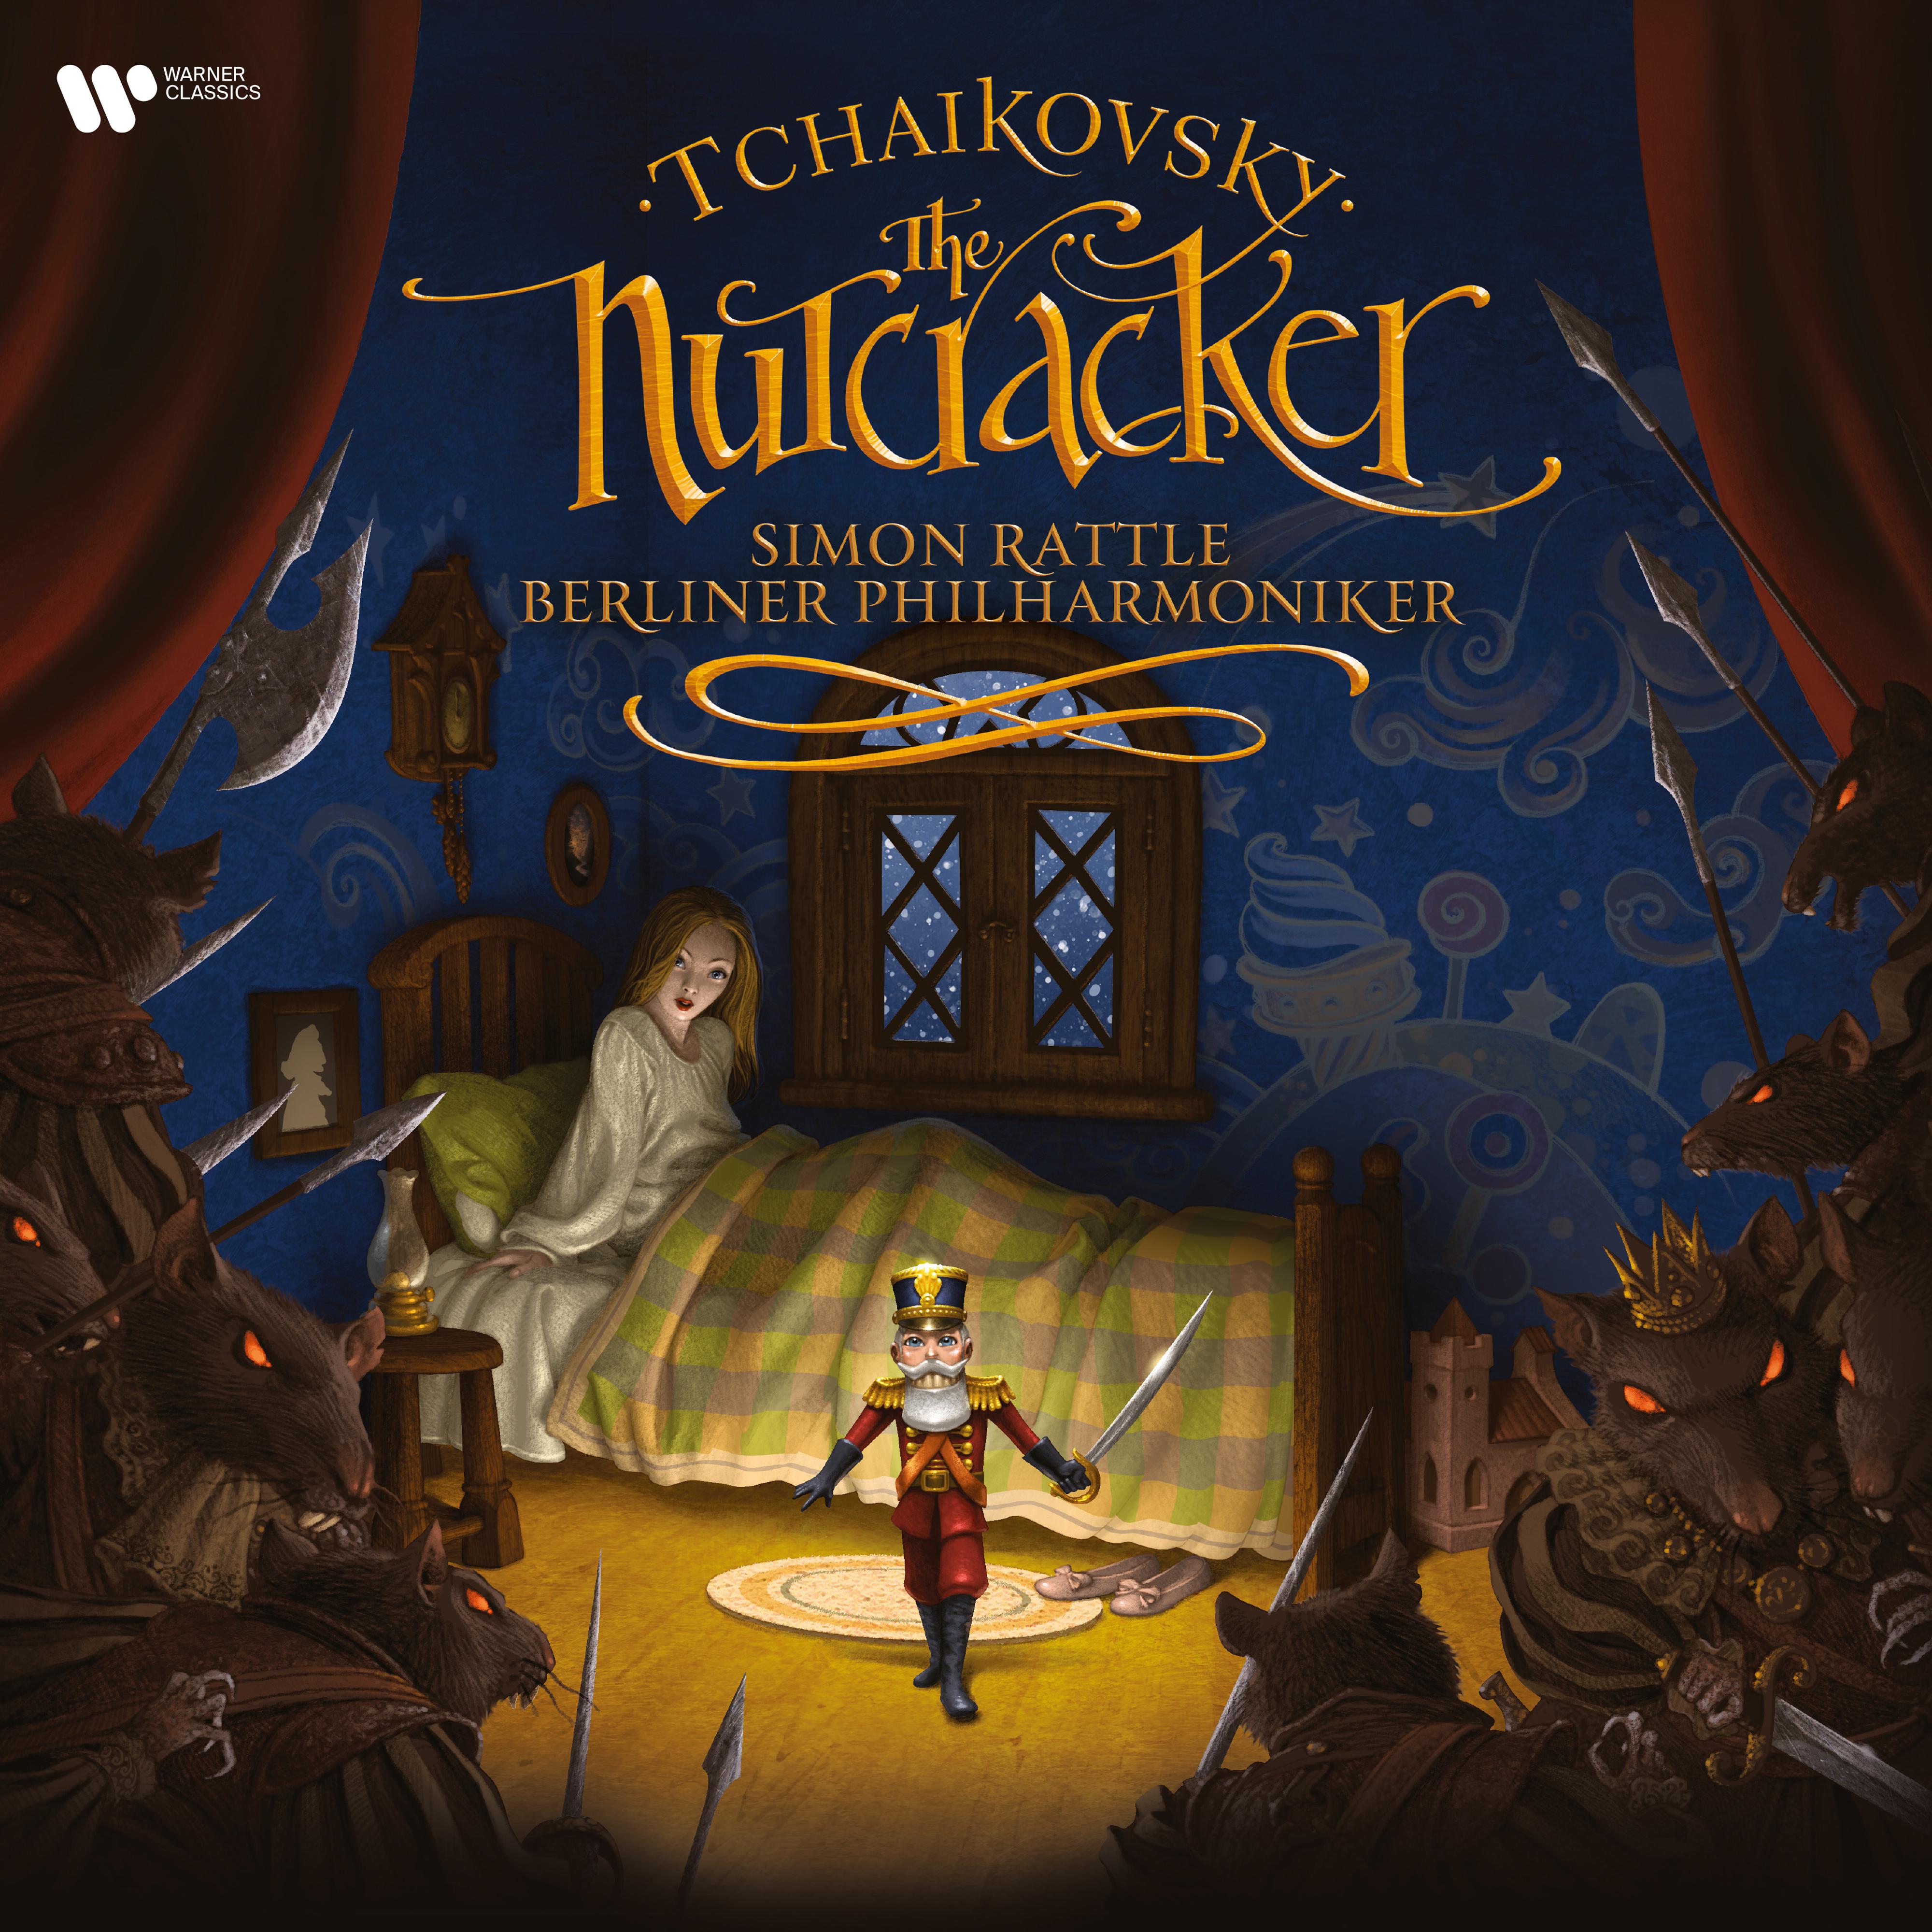 The Nutcracker - Ballet, Op.71, Act I:No. 5 - Scene - Grandfather's Dance